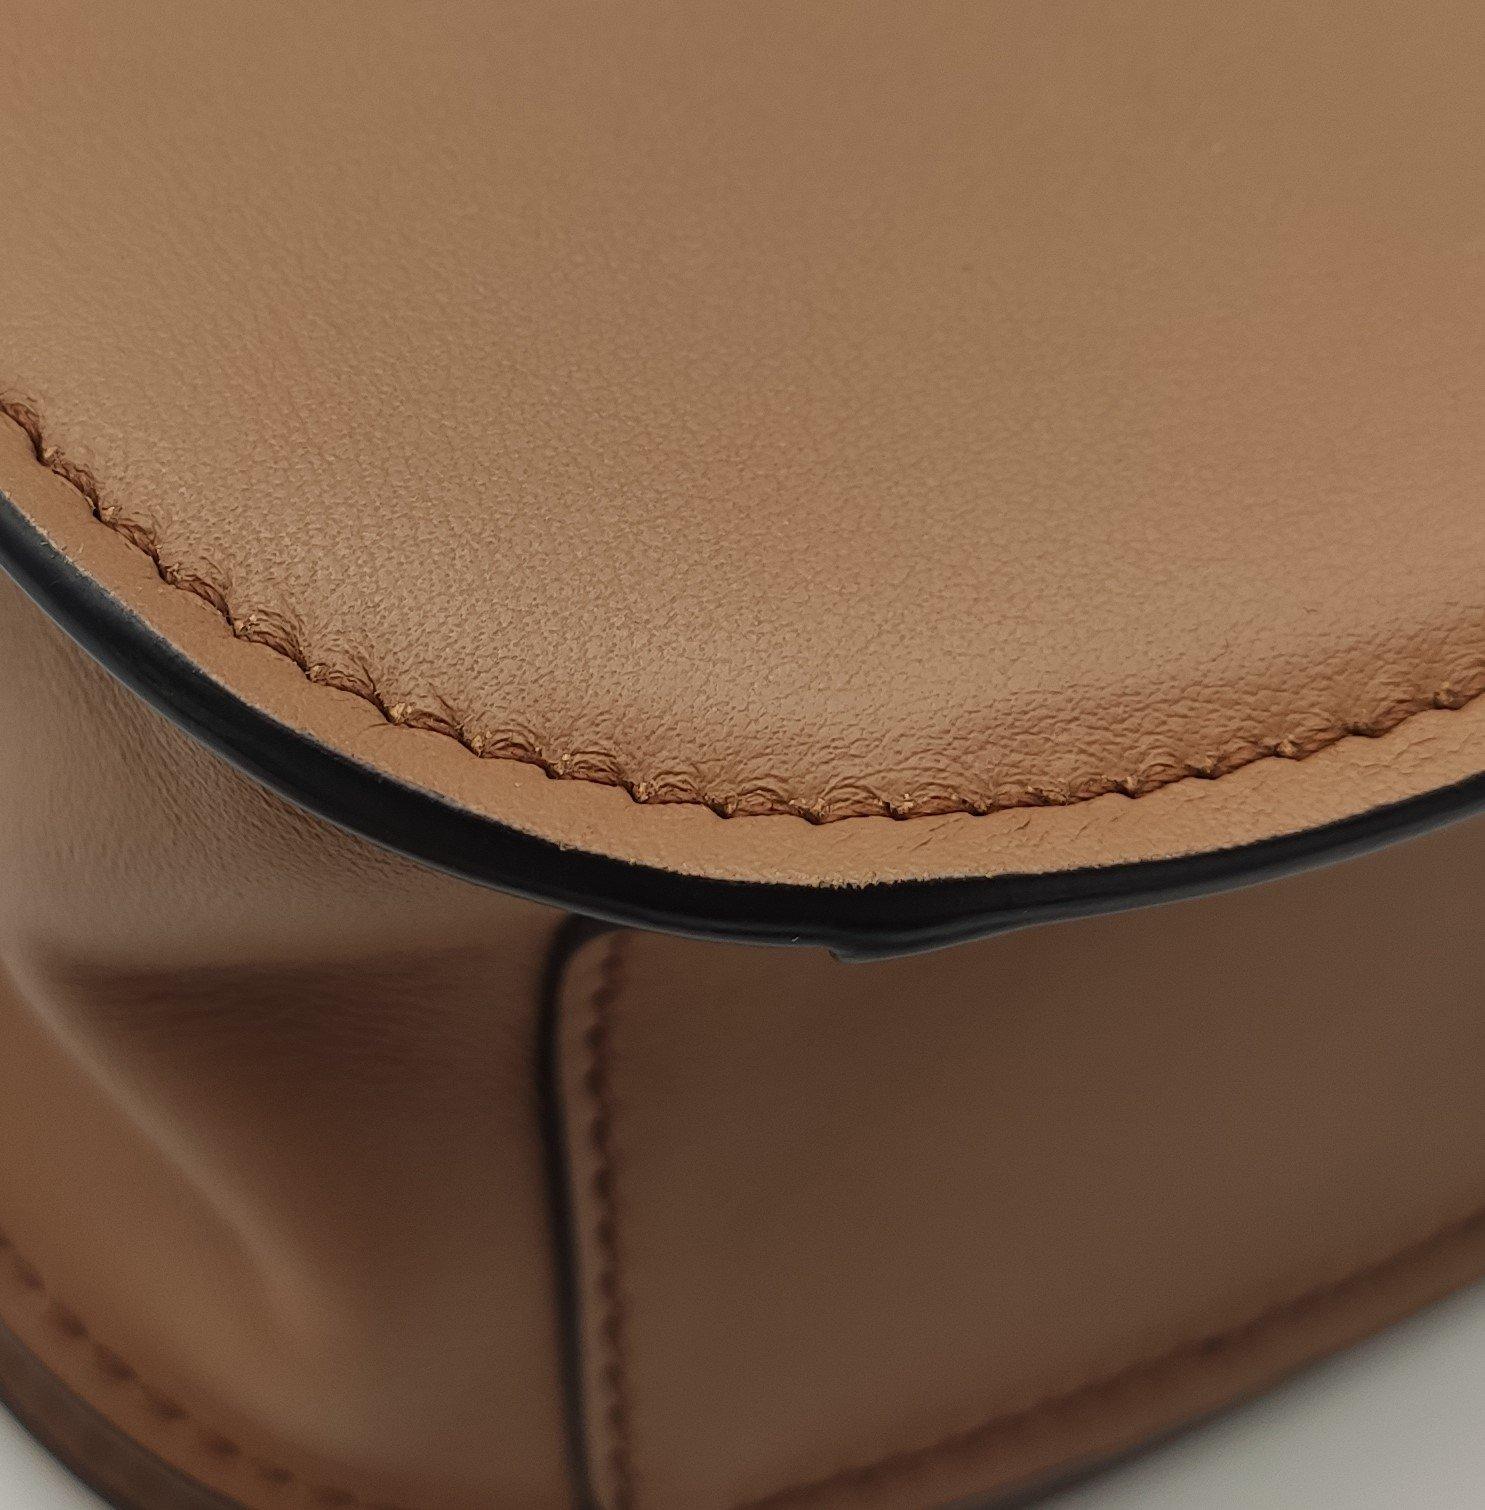 PRADA Pionniere Shoulder bag in Brown Leather 3